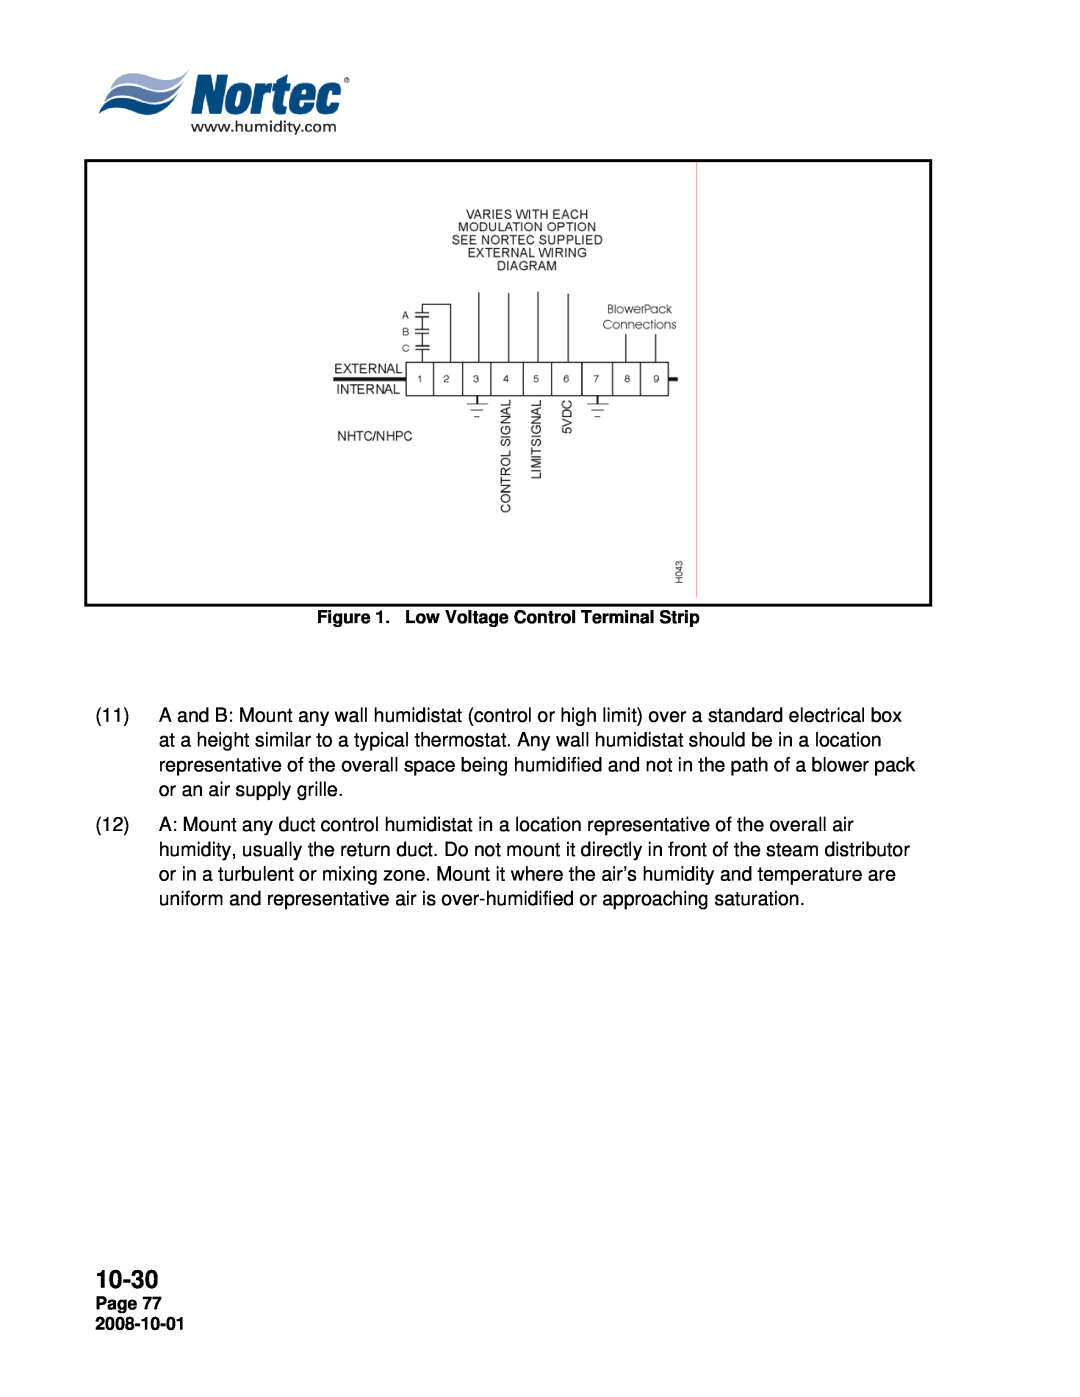 Nortec NHTC, NHPC manual 10-30, Low Voltage Control Terminal Strip, Page 77 